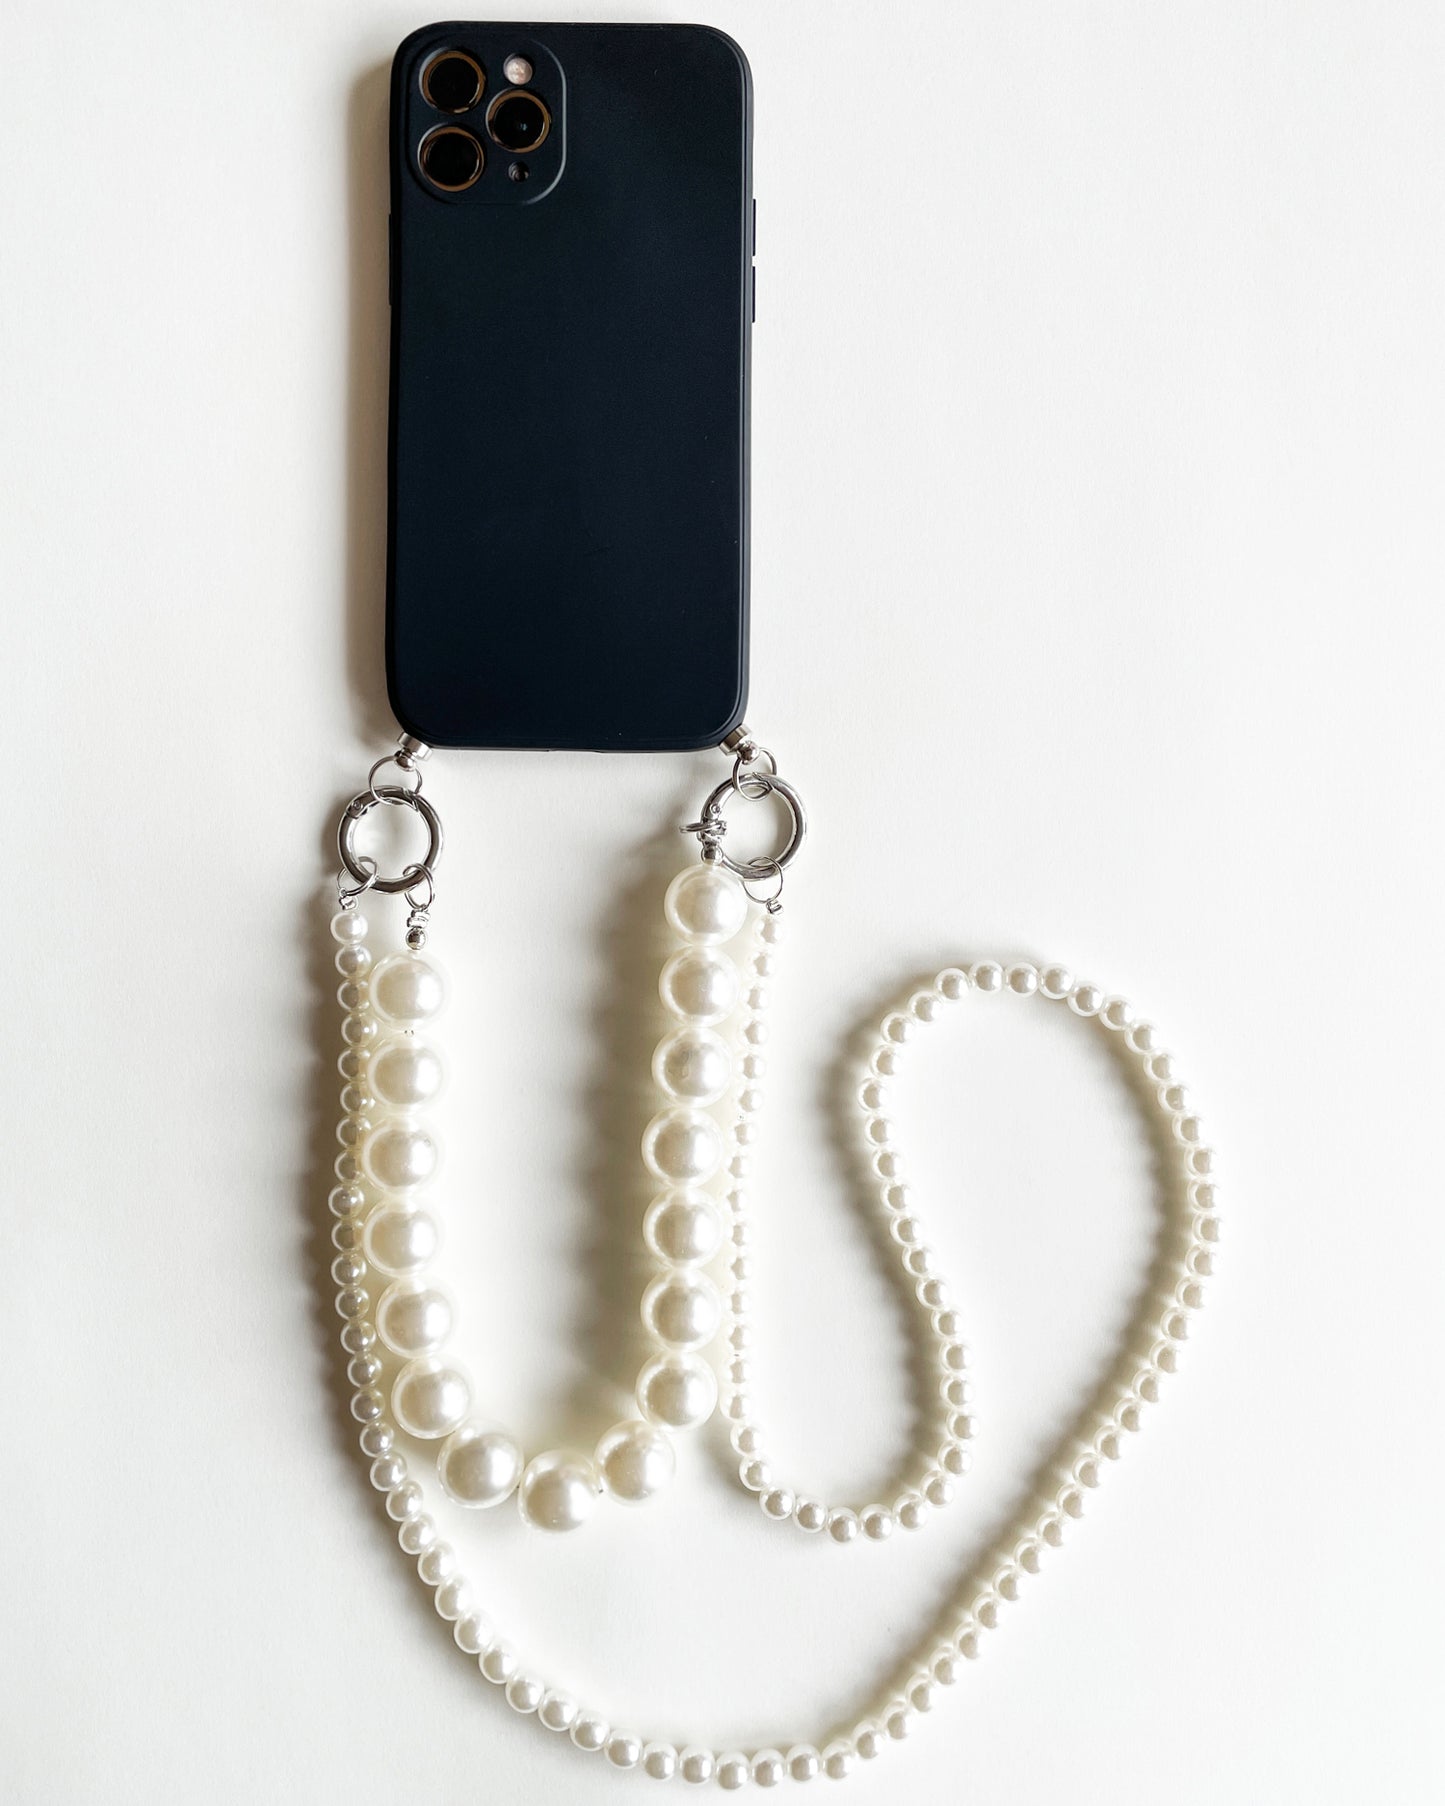 black silicone pearls straps phone case *pre-order*